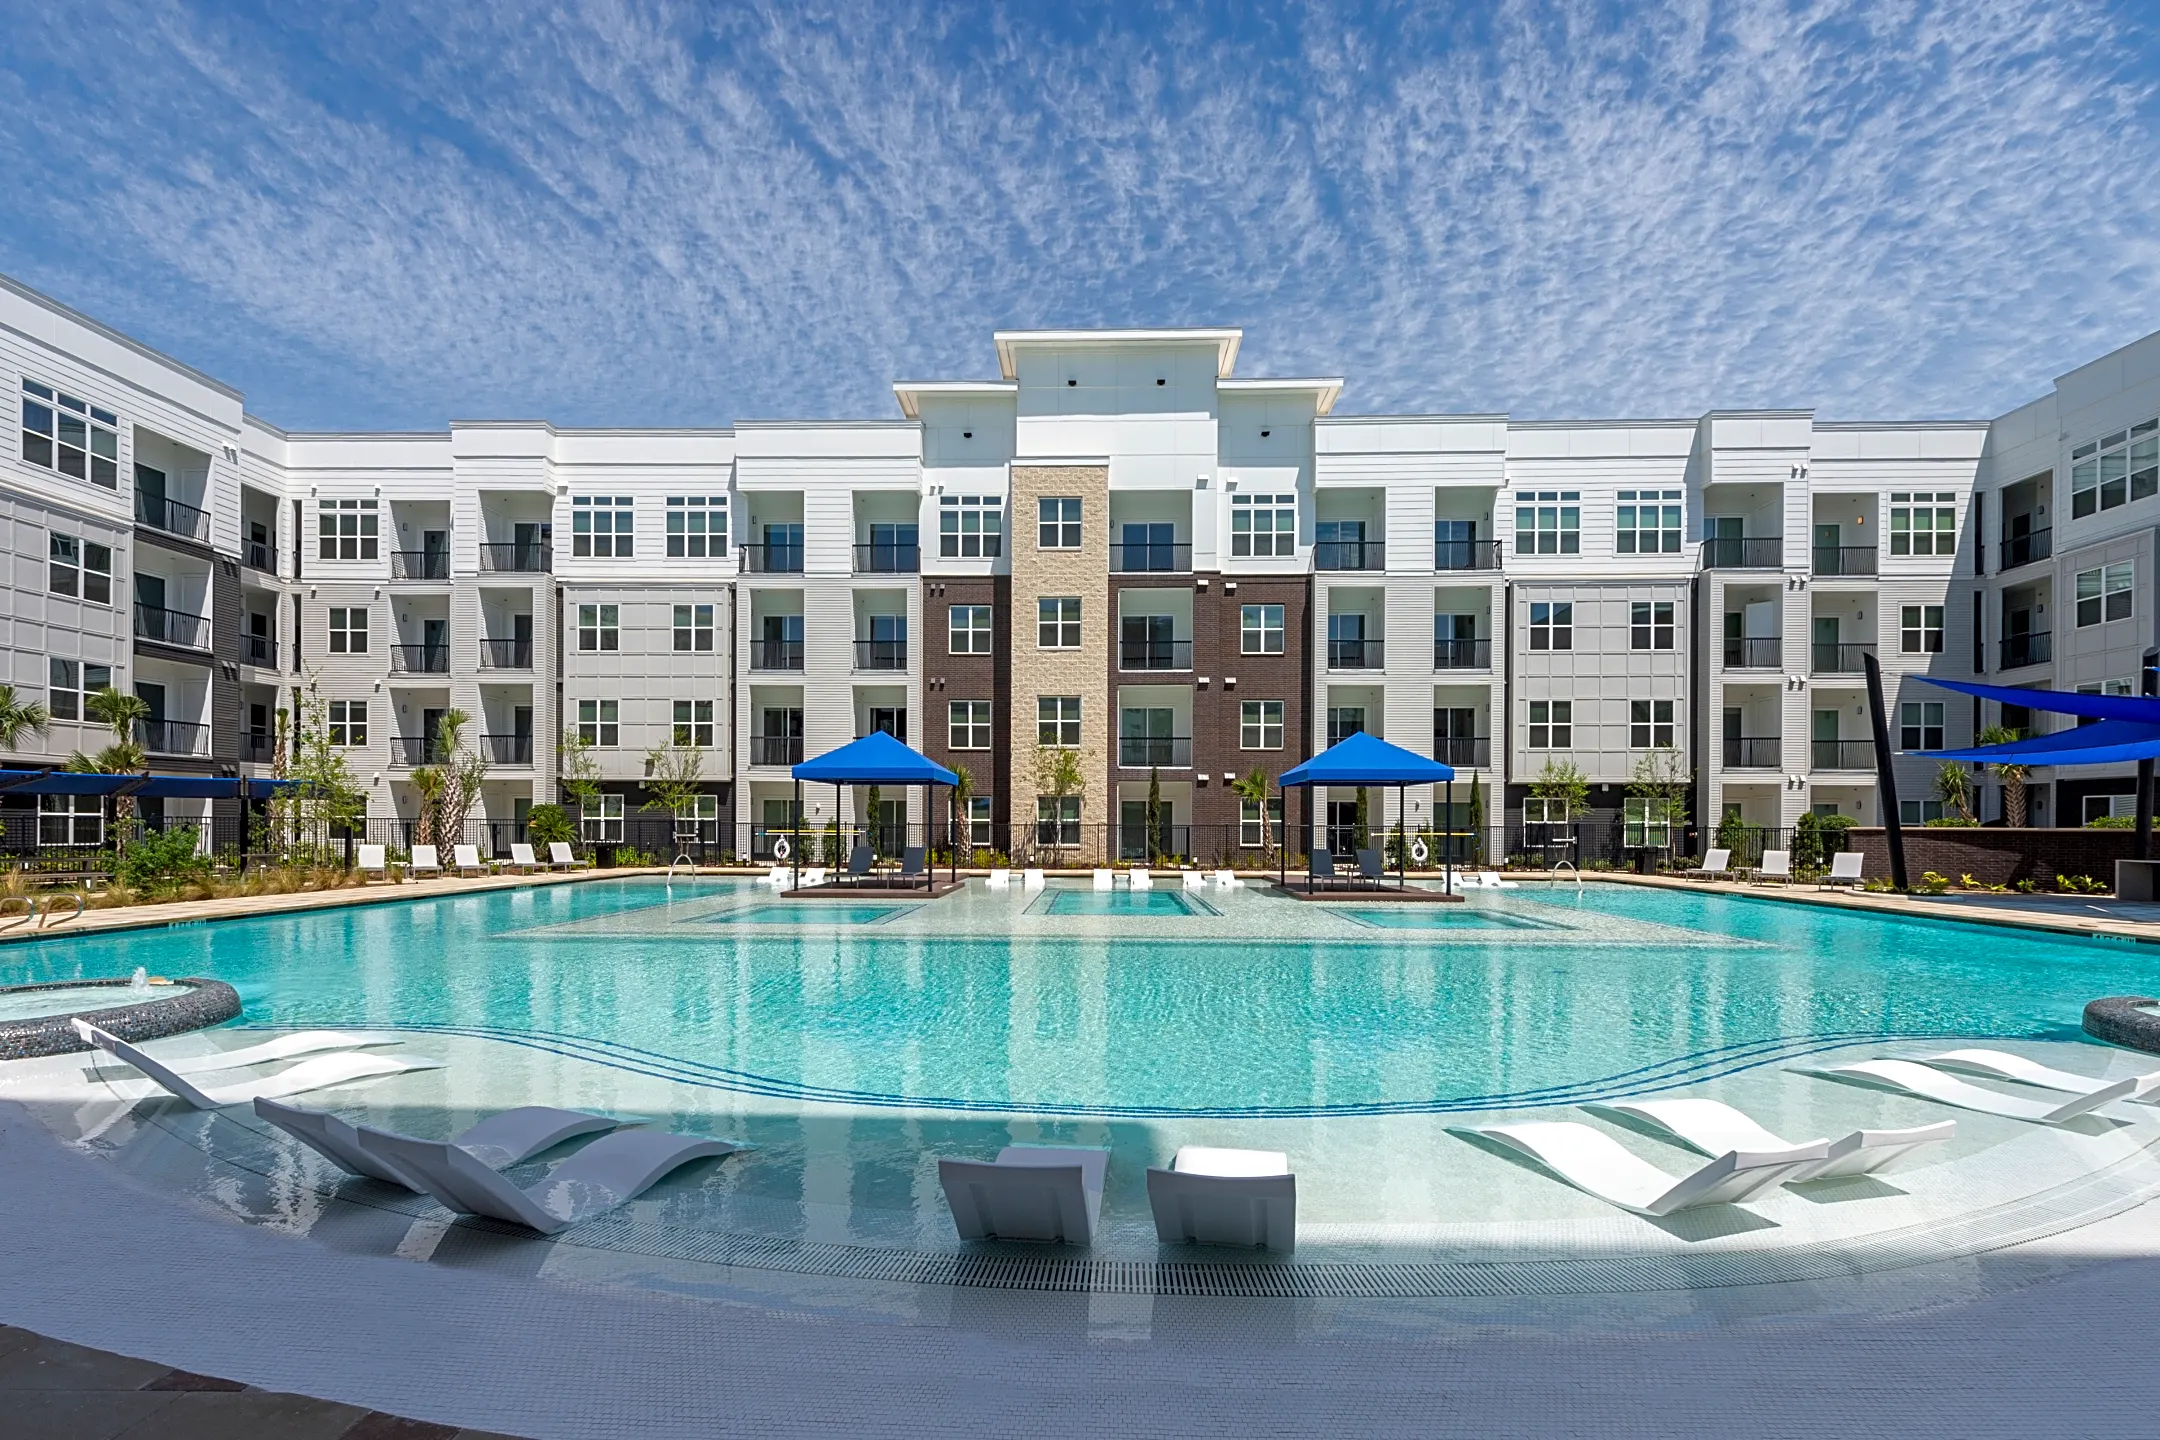 Pool - Domain Heights Apartments - Houston, TX